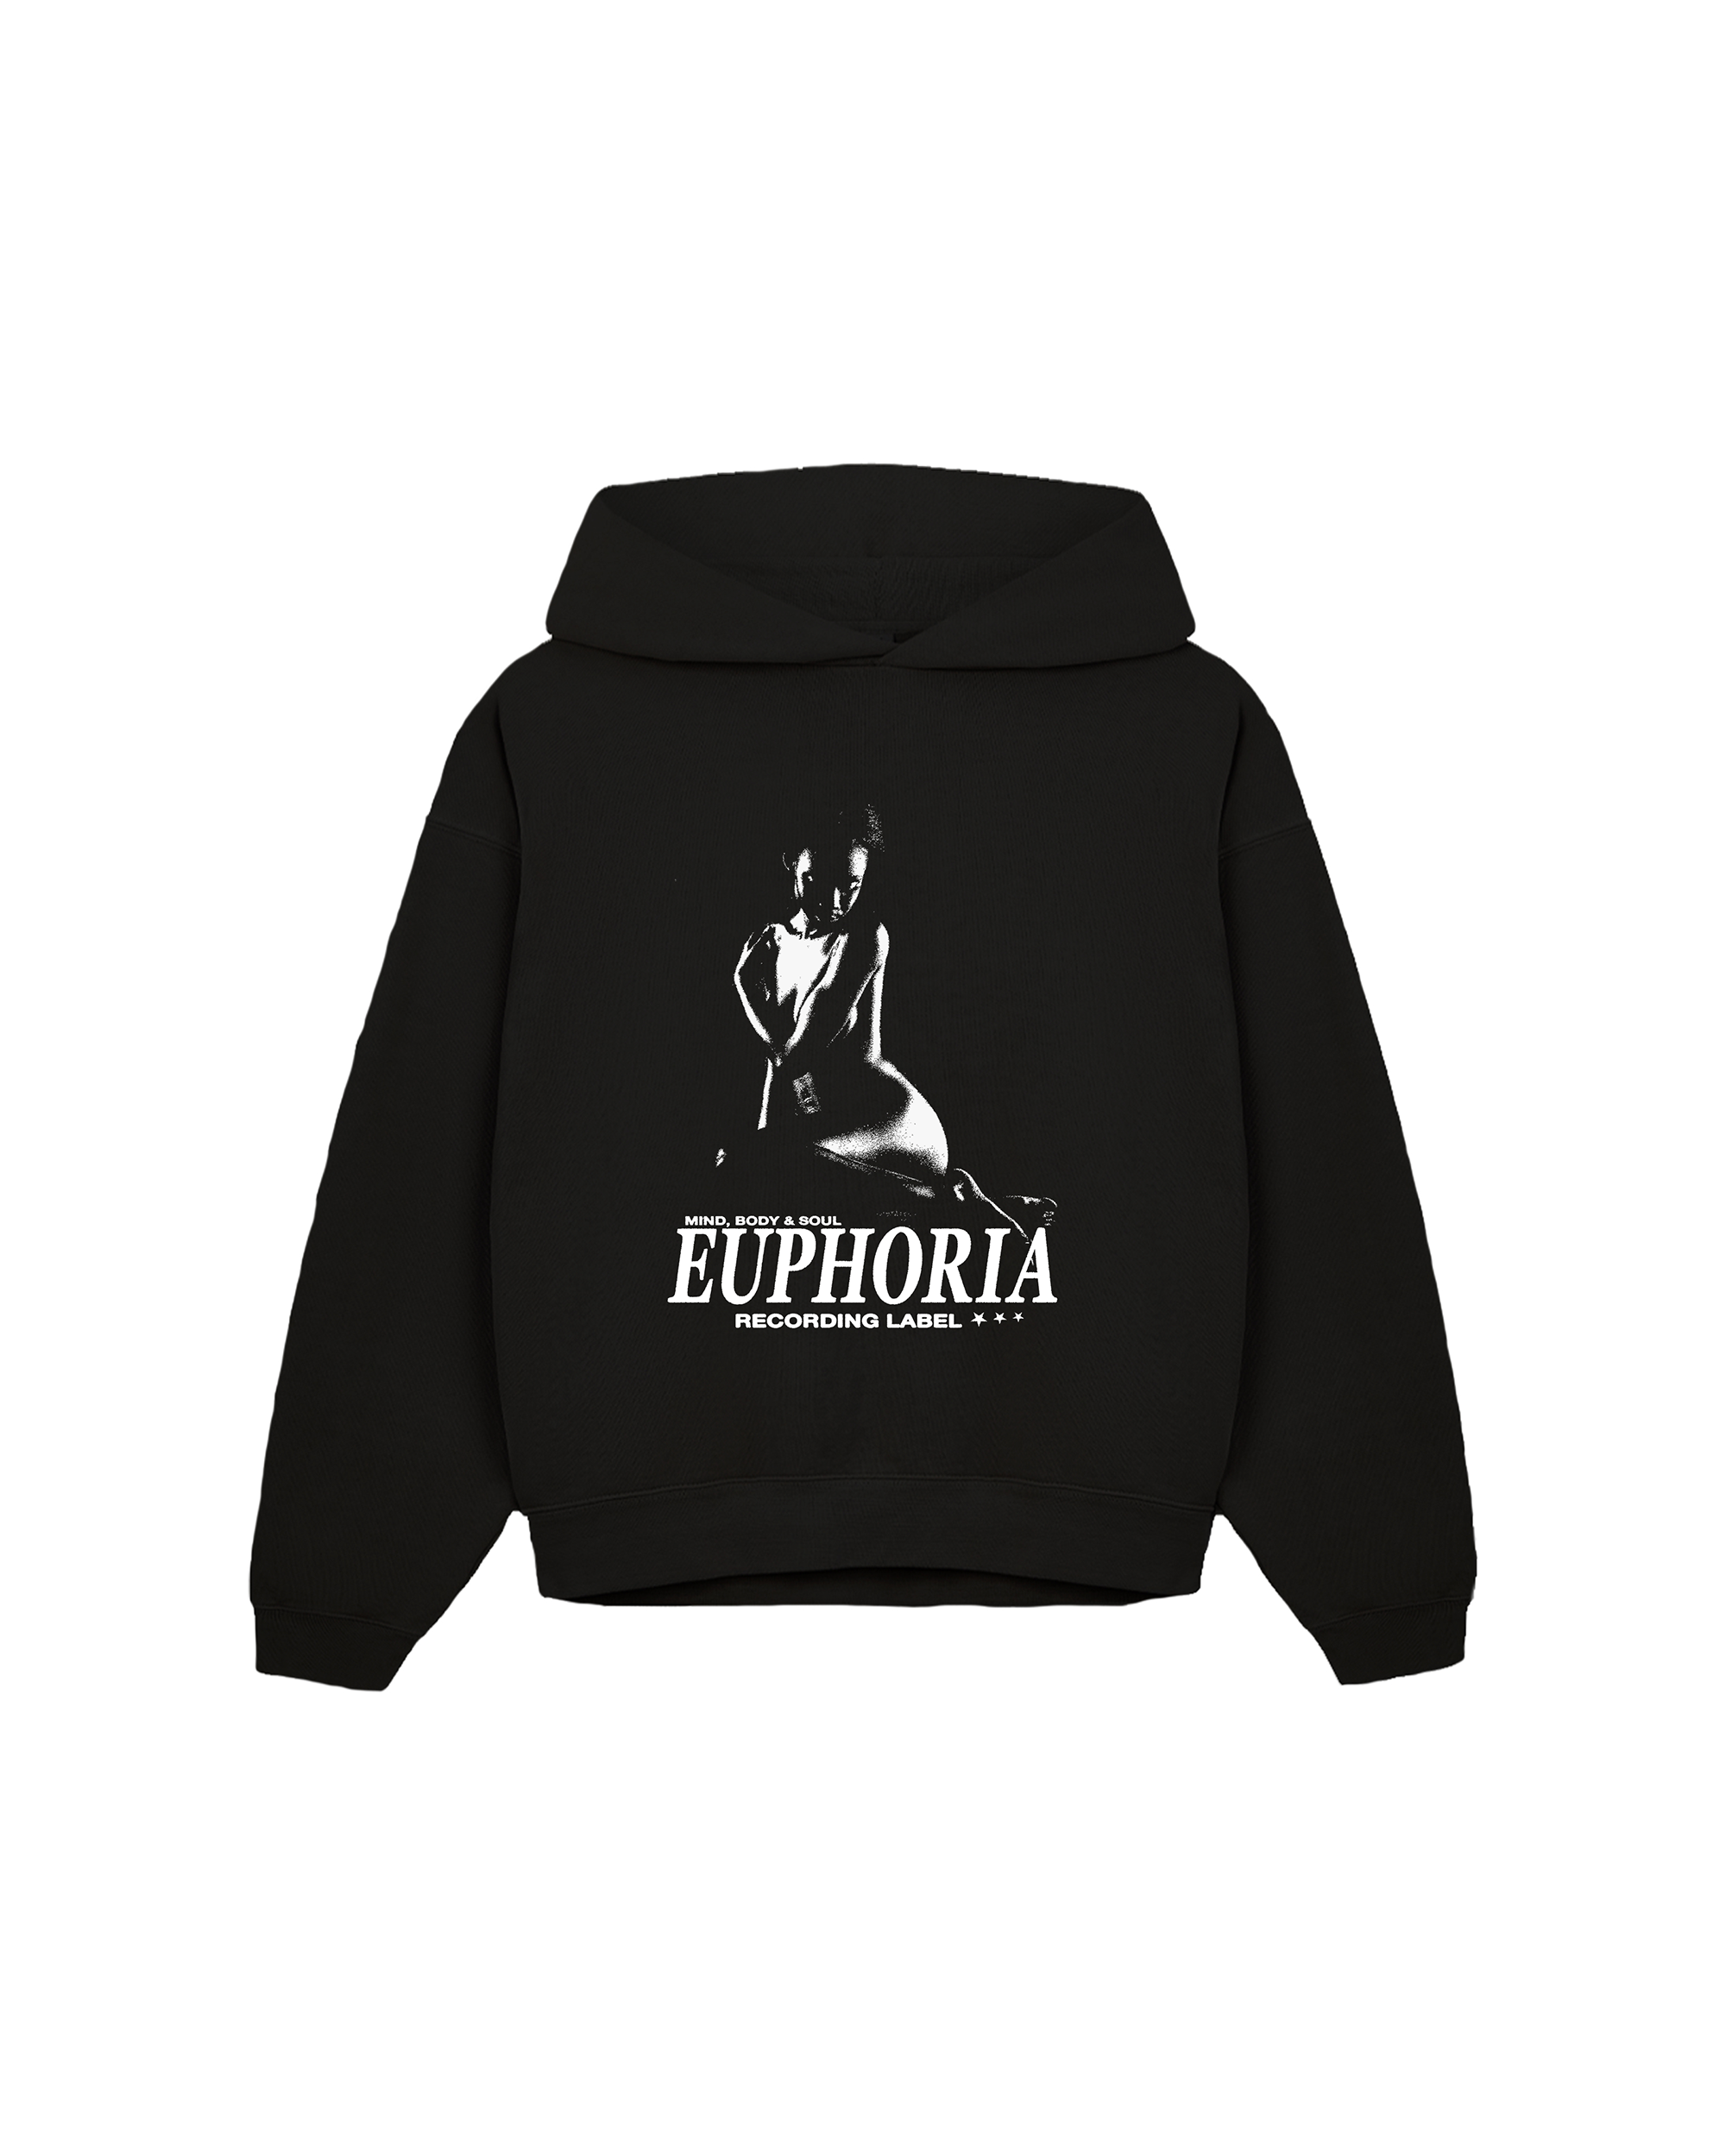 Euphoria Hoodie (Charity release)